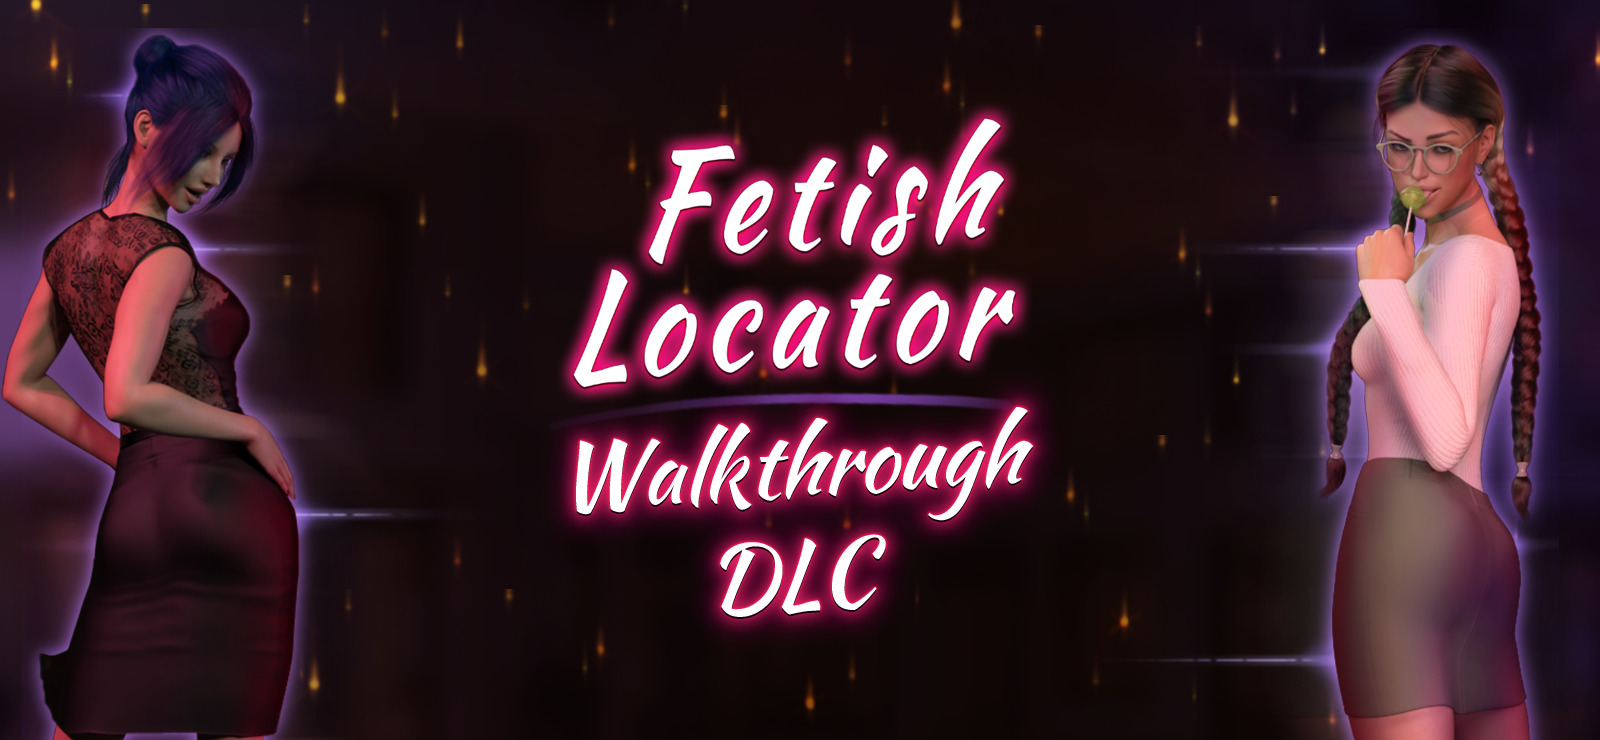 Fetish locator week 1 walkthrough